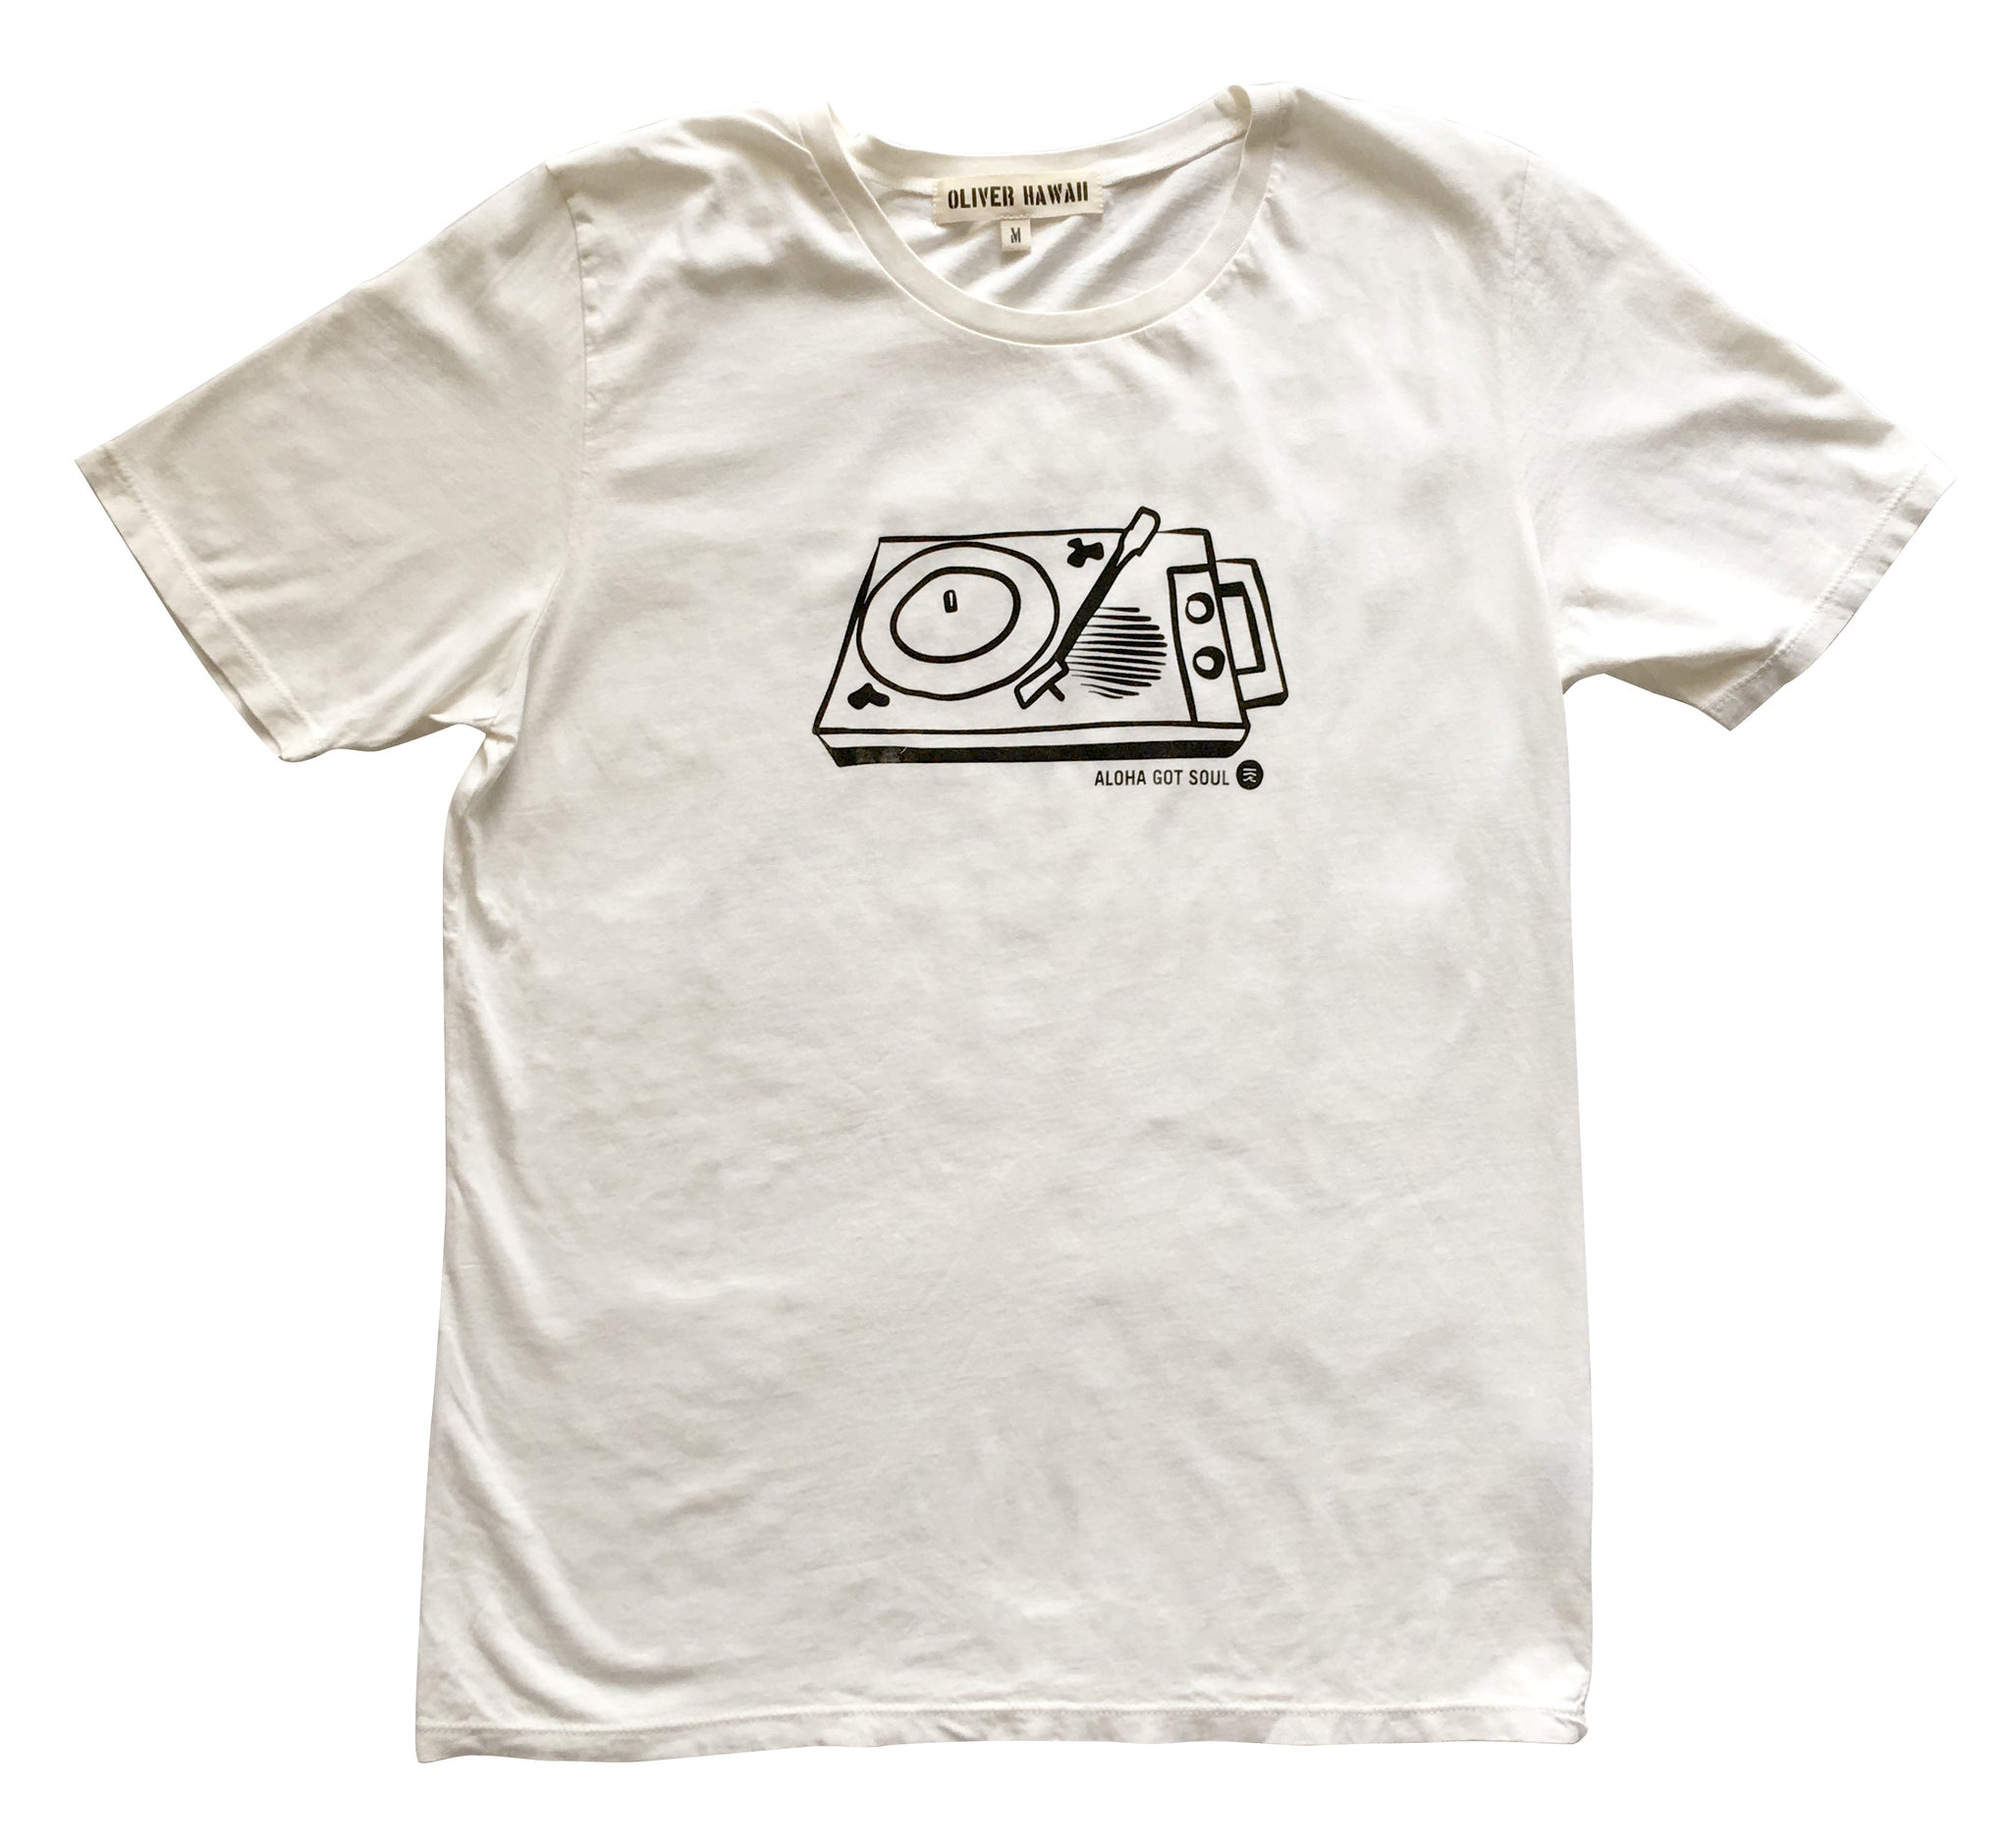 Oliver Hawaii x Aloha Got Soul - T-shirt [S only]